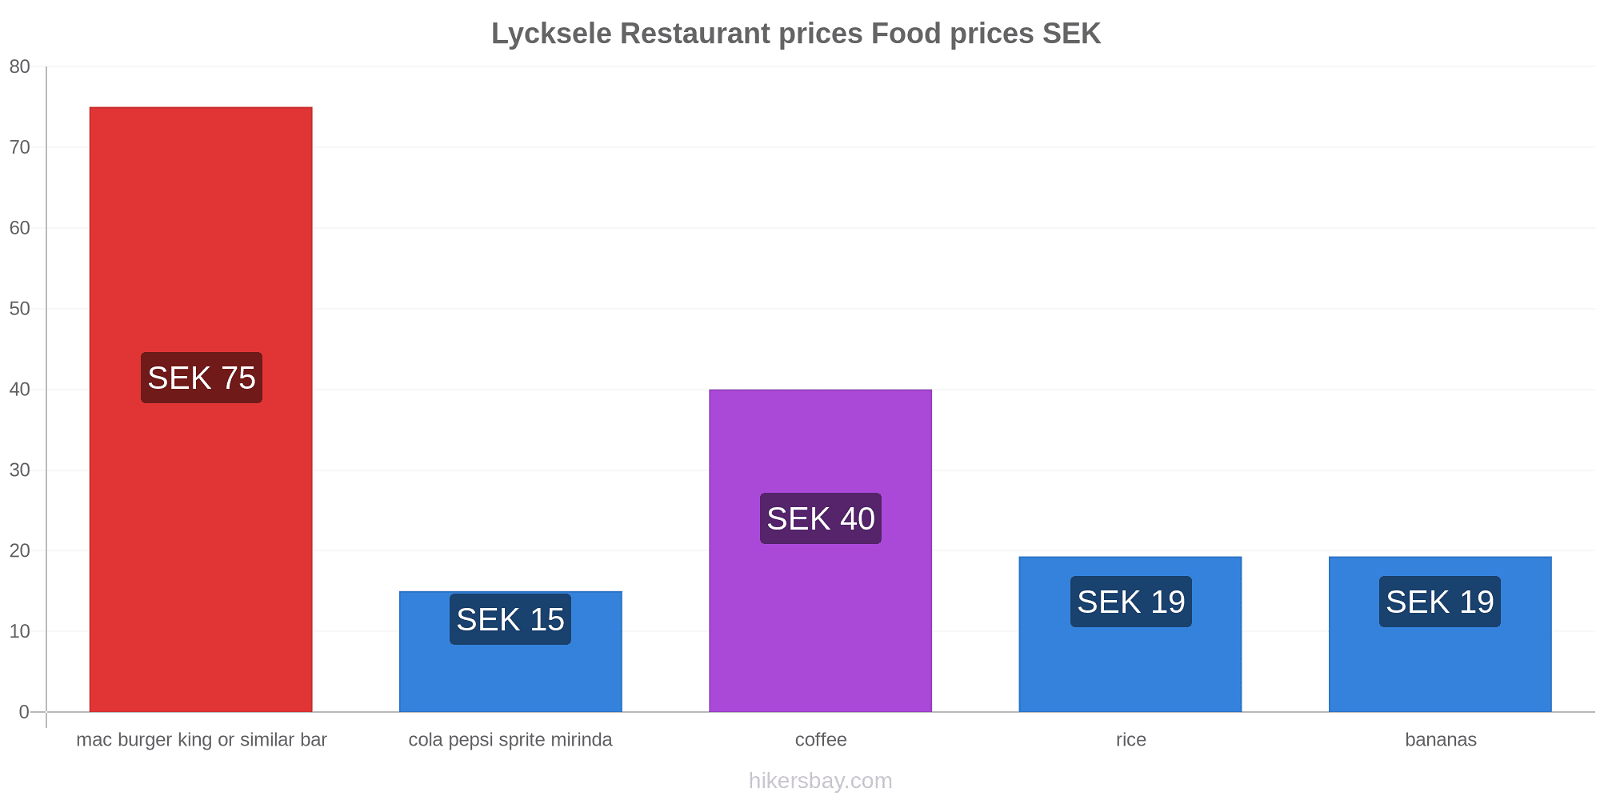 Lycksele price changes hikersbay.com